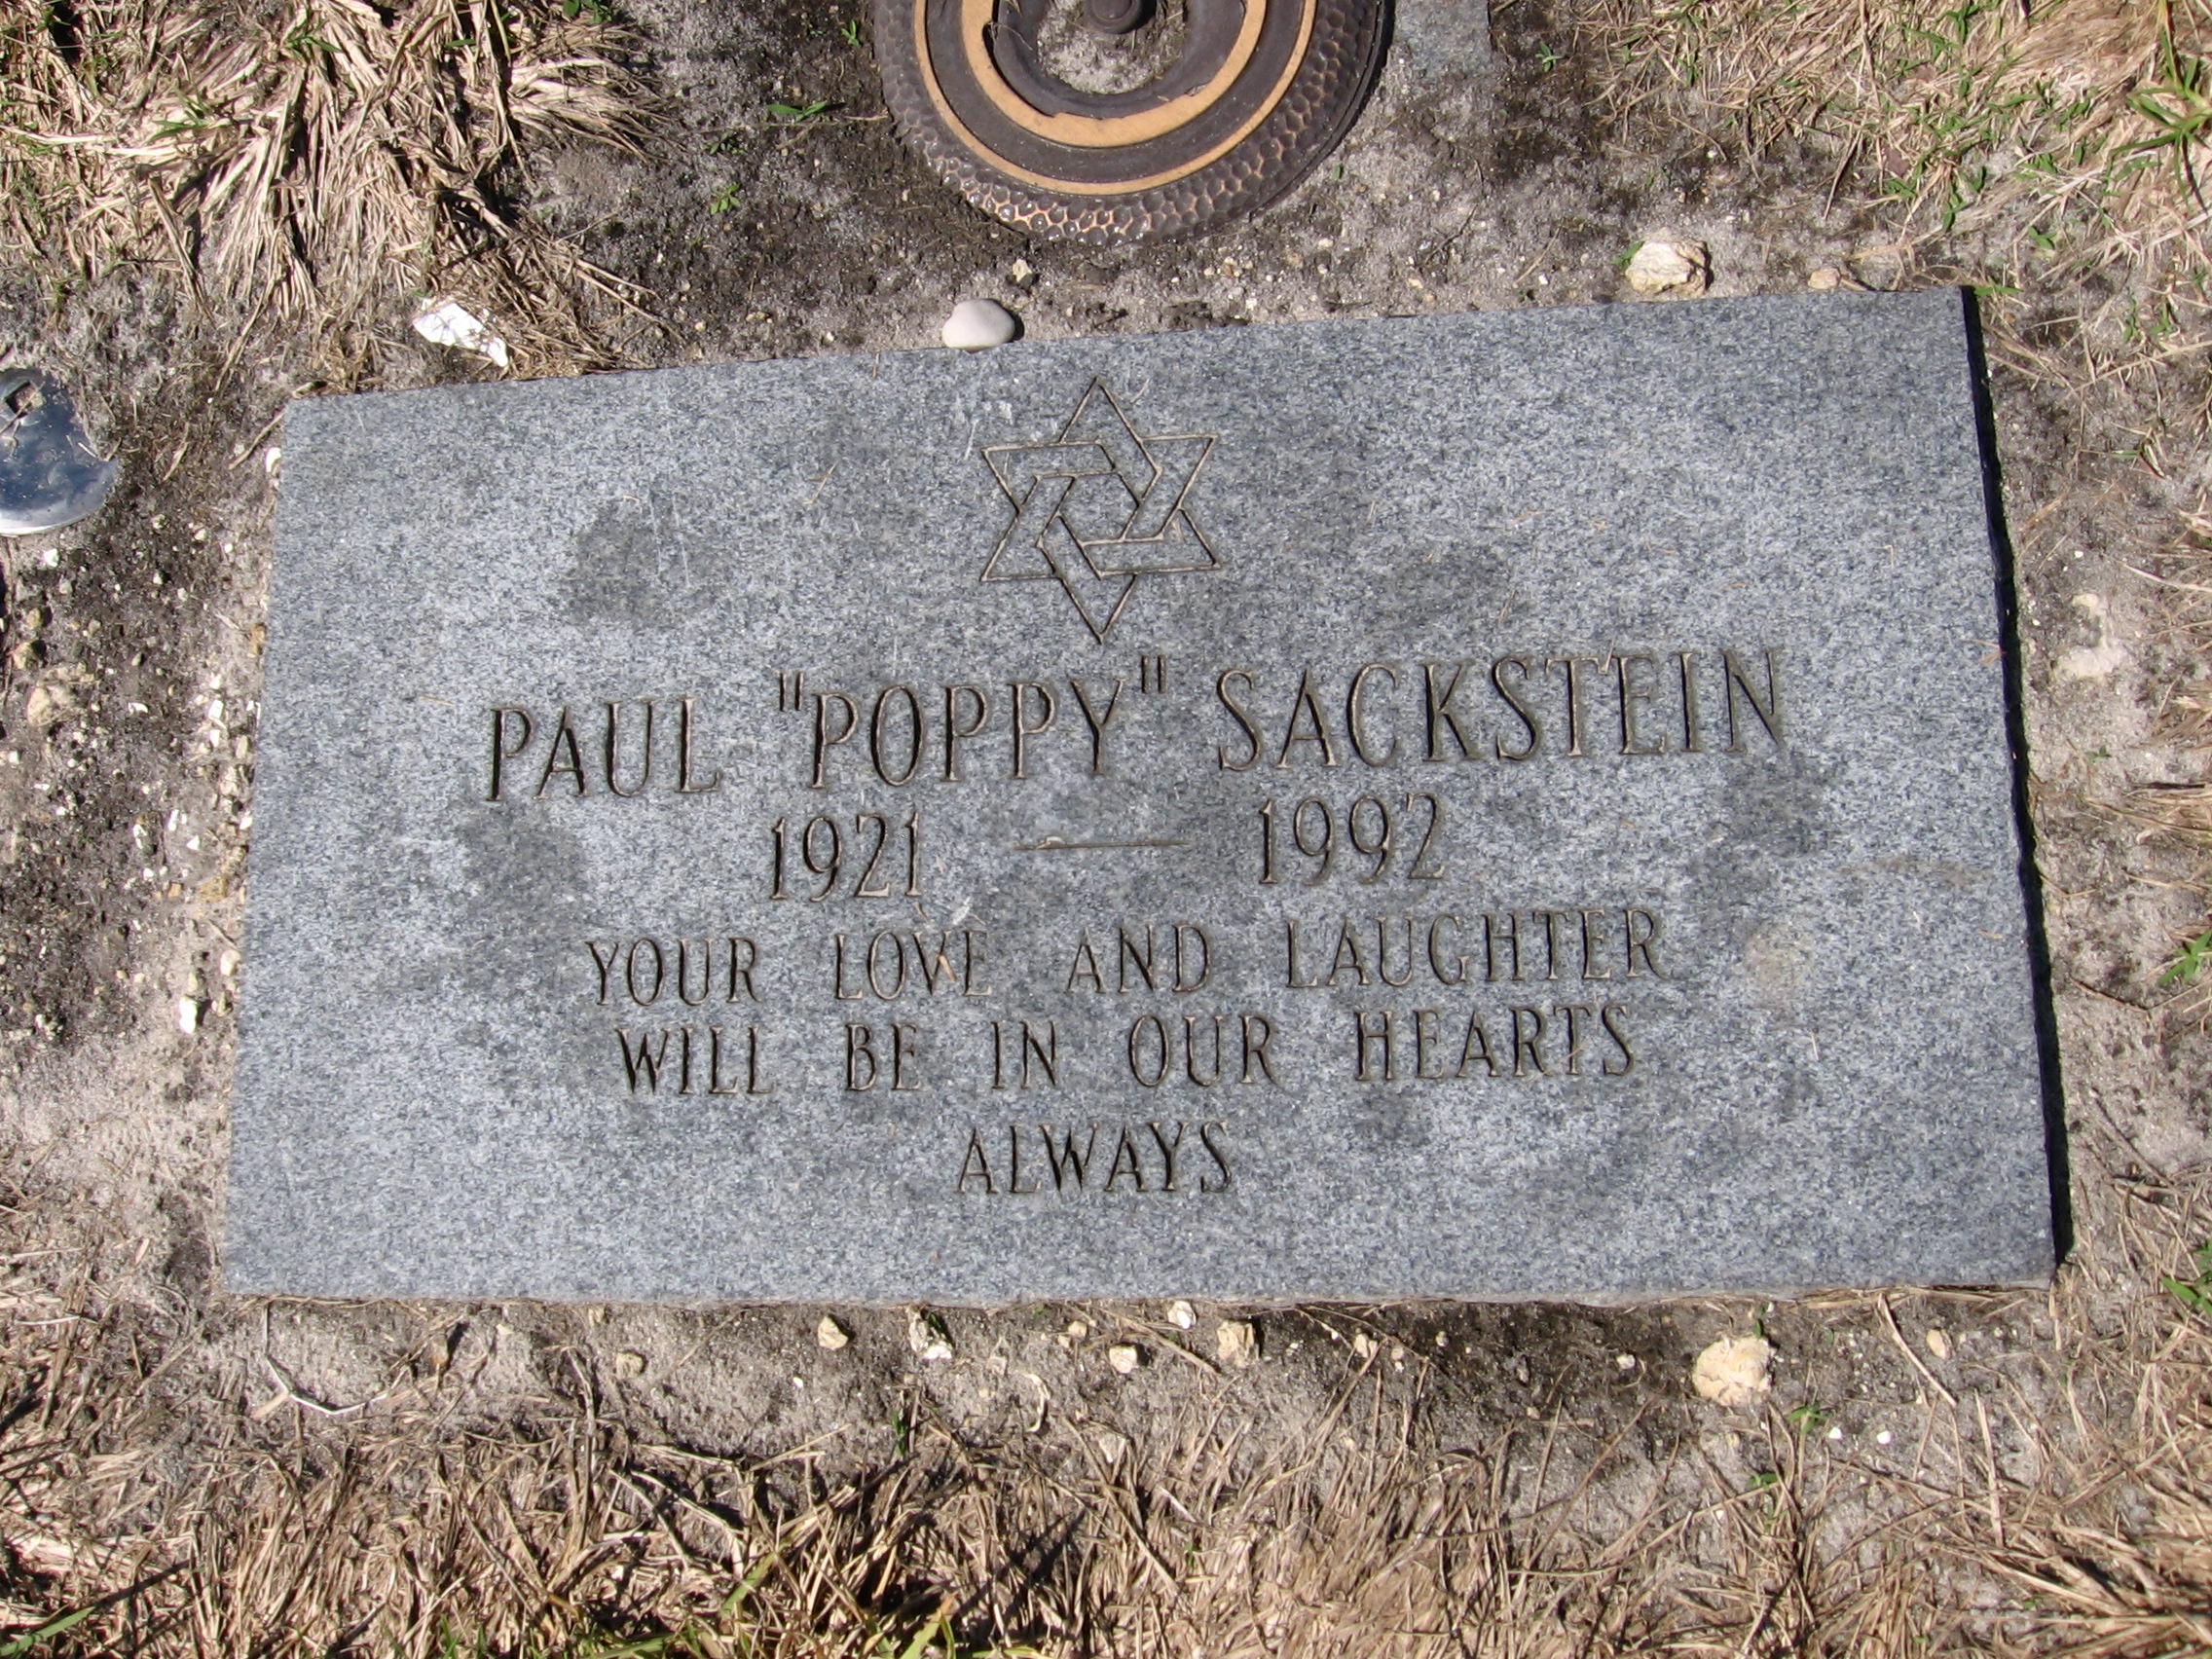 Paul "Poppy" Sackstein